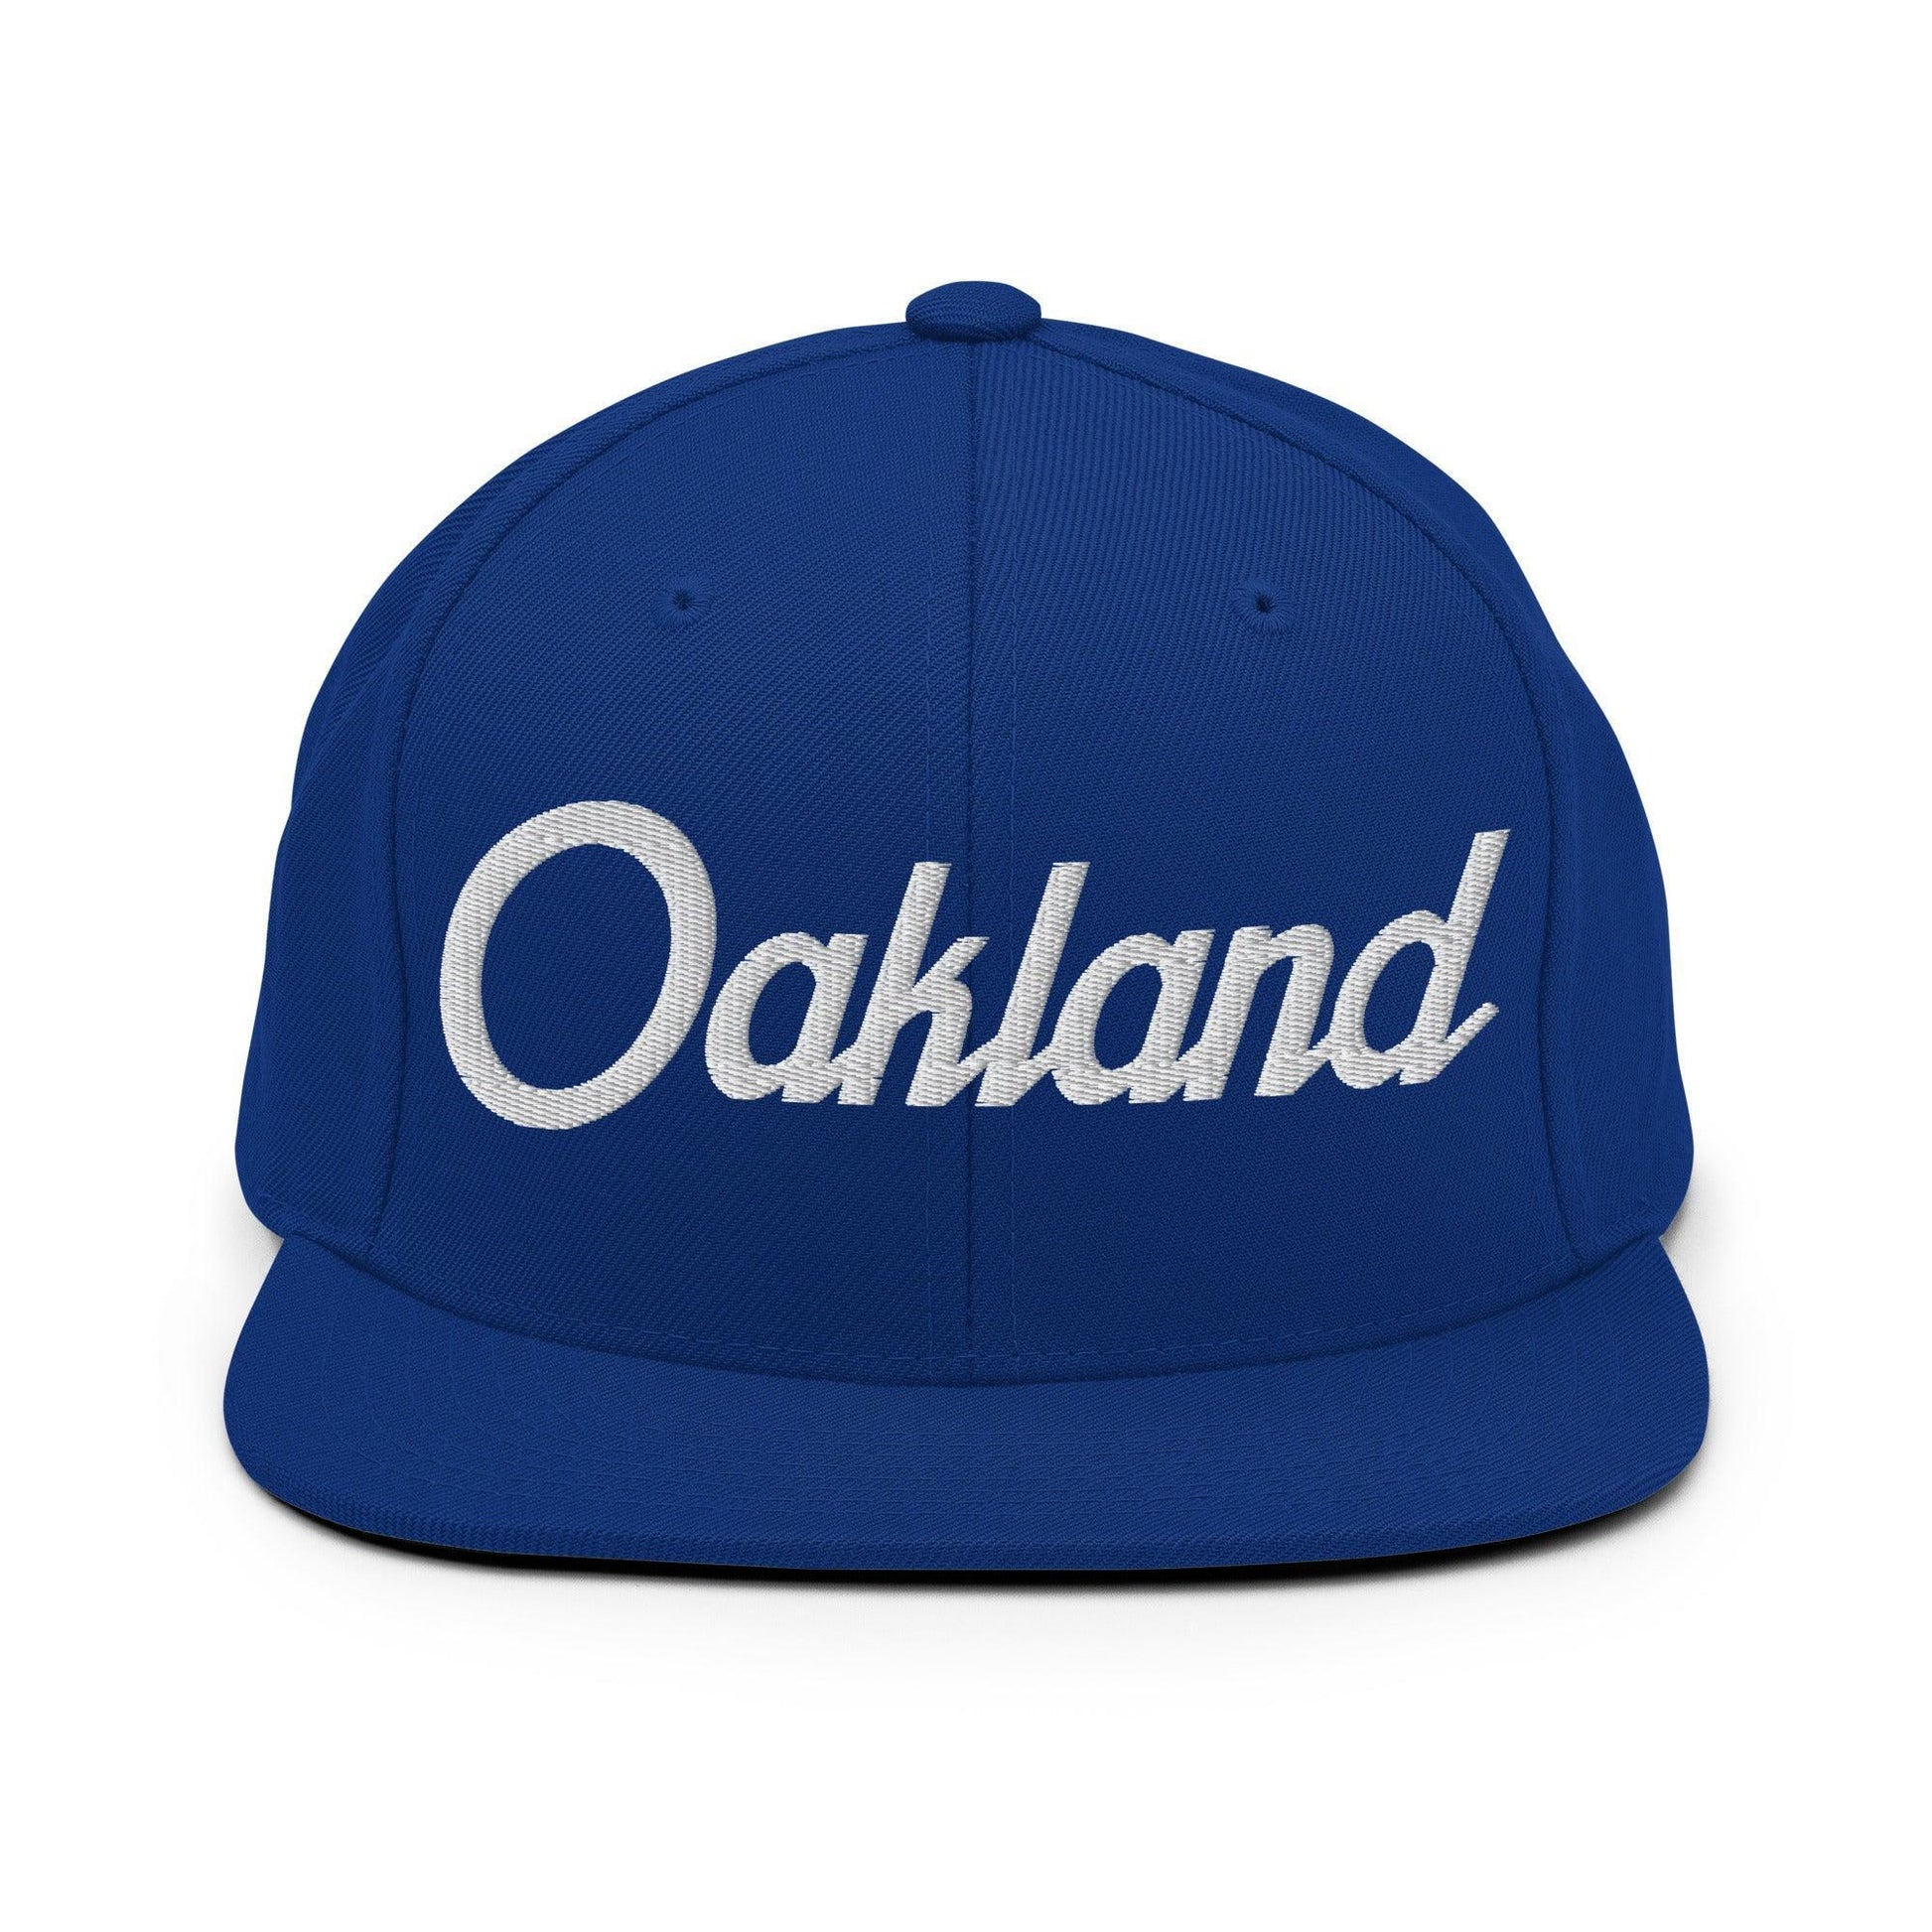 Oakland Script Snapback Hat Royal Blue